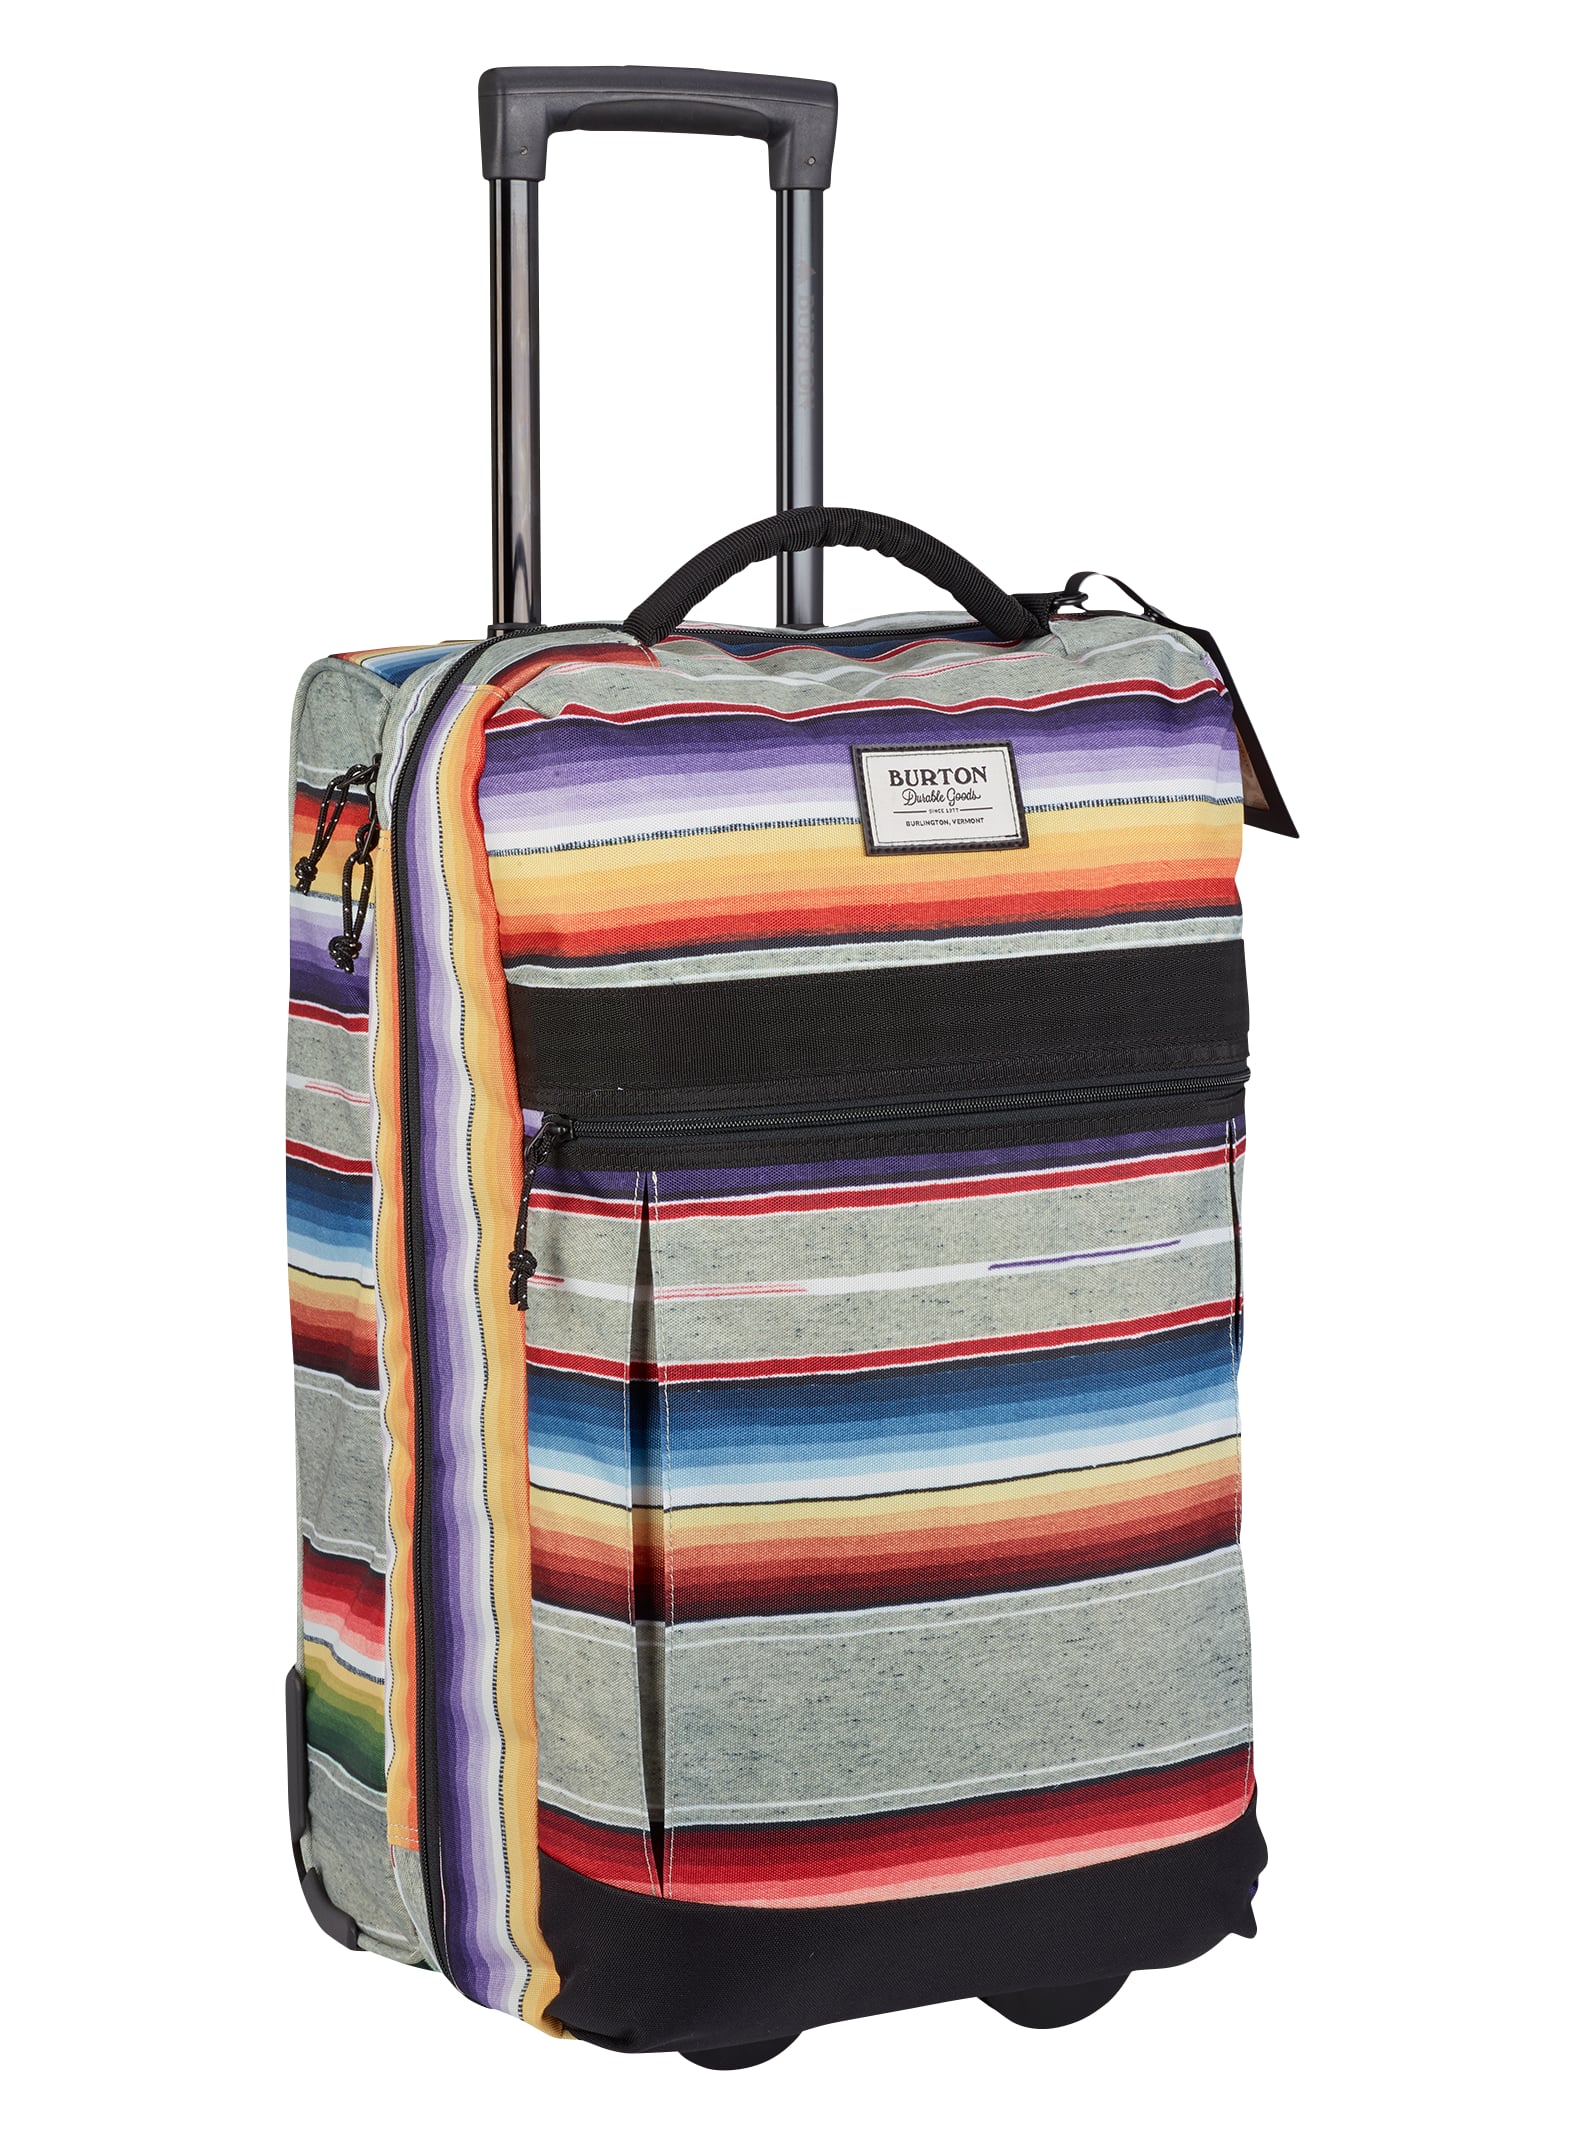 Burton / Charter Roller Travel Bag